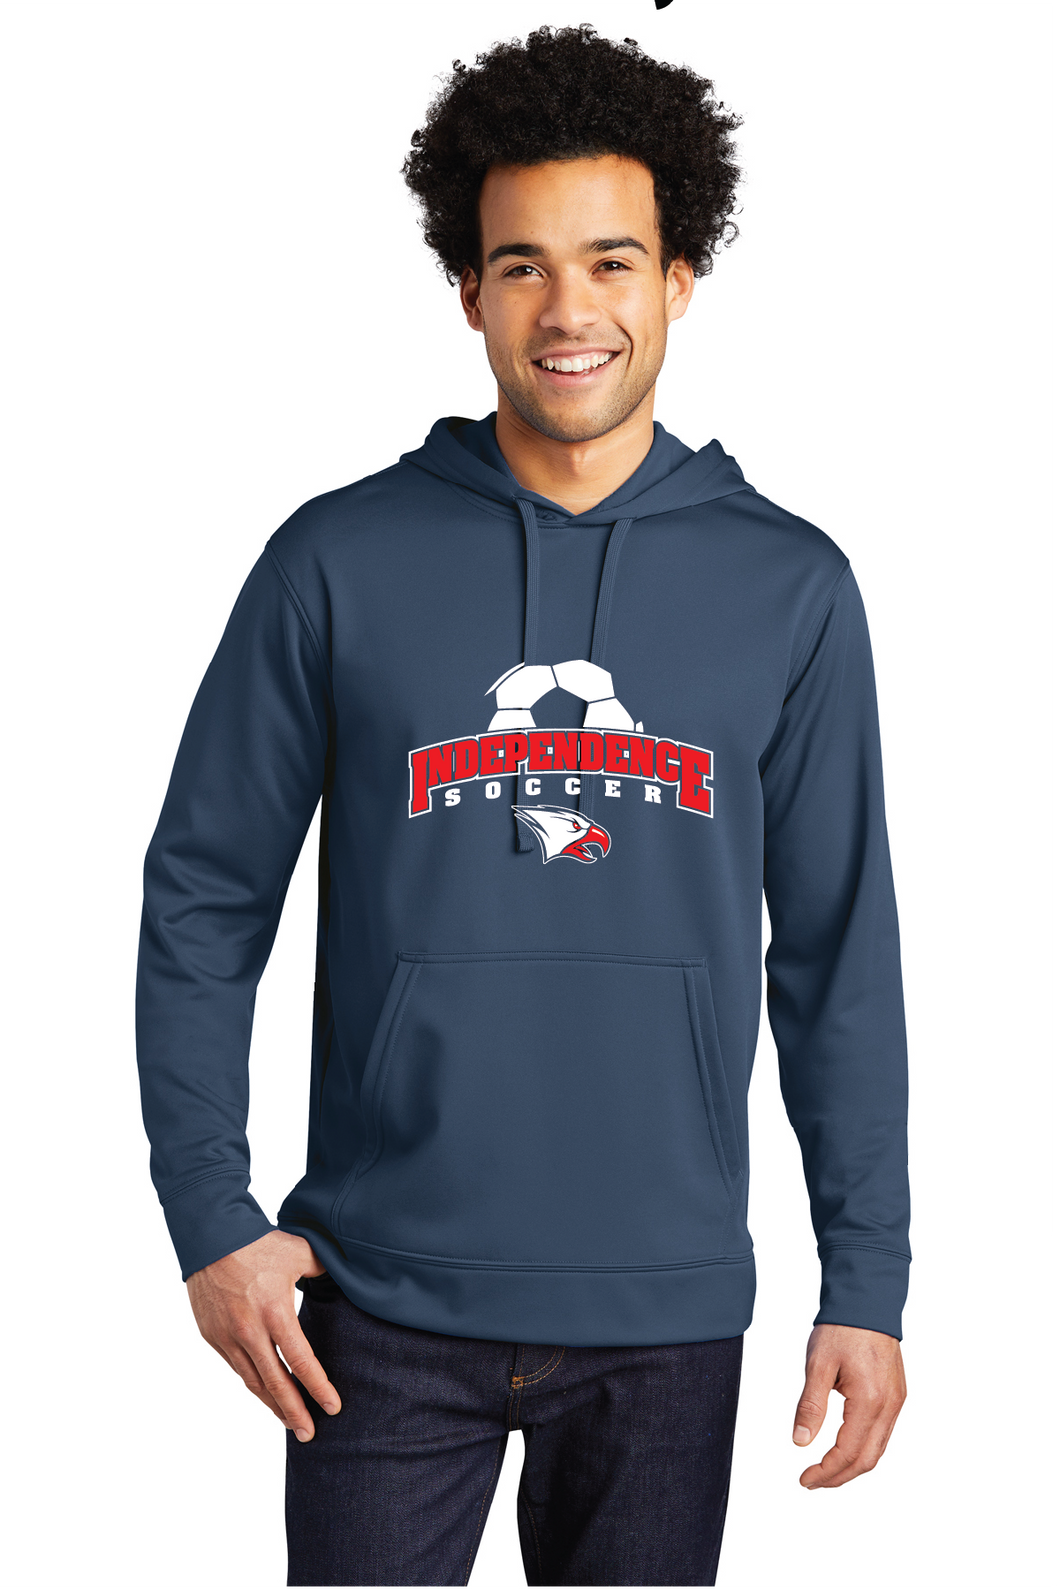 Performance Fleece Pullover Hooded Sweatshirt / Navy  / Independence Middle School Boys Soccer